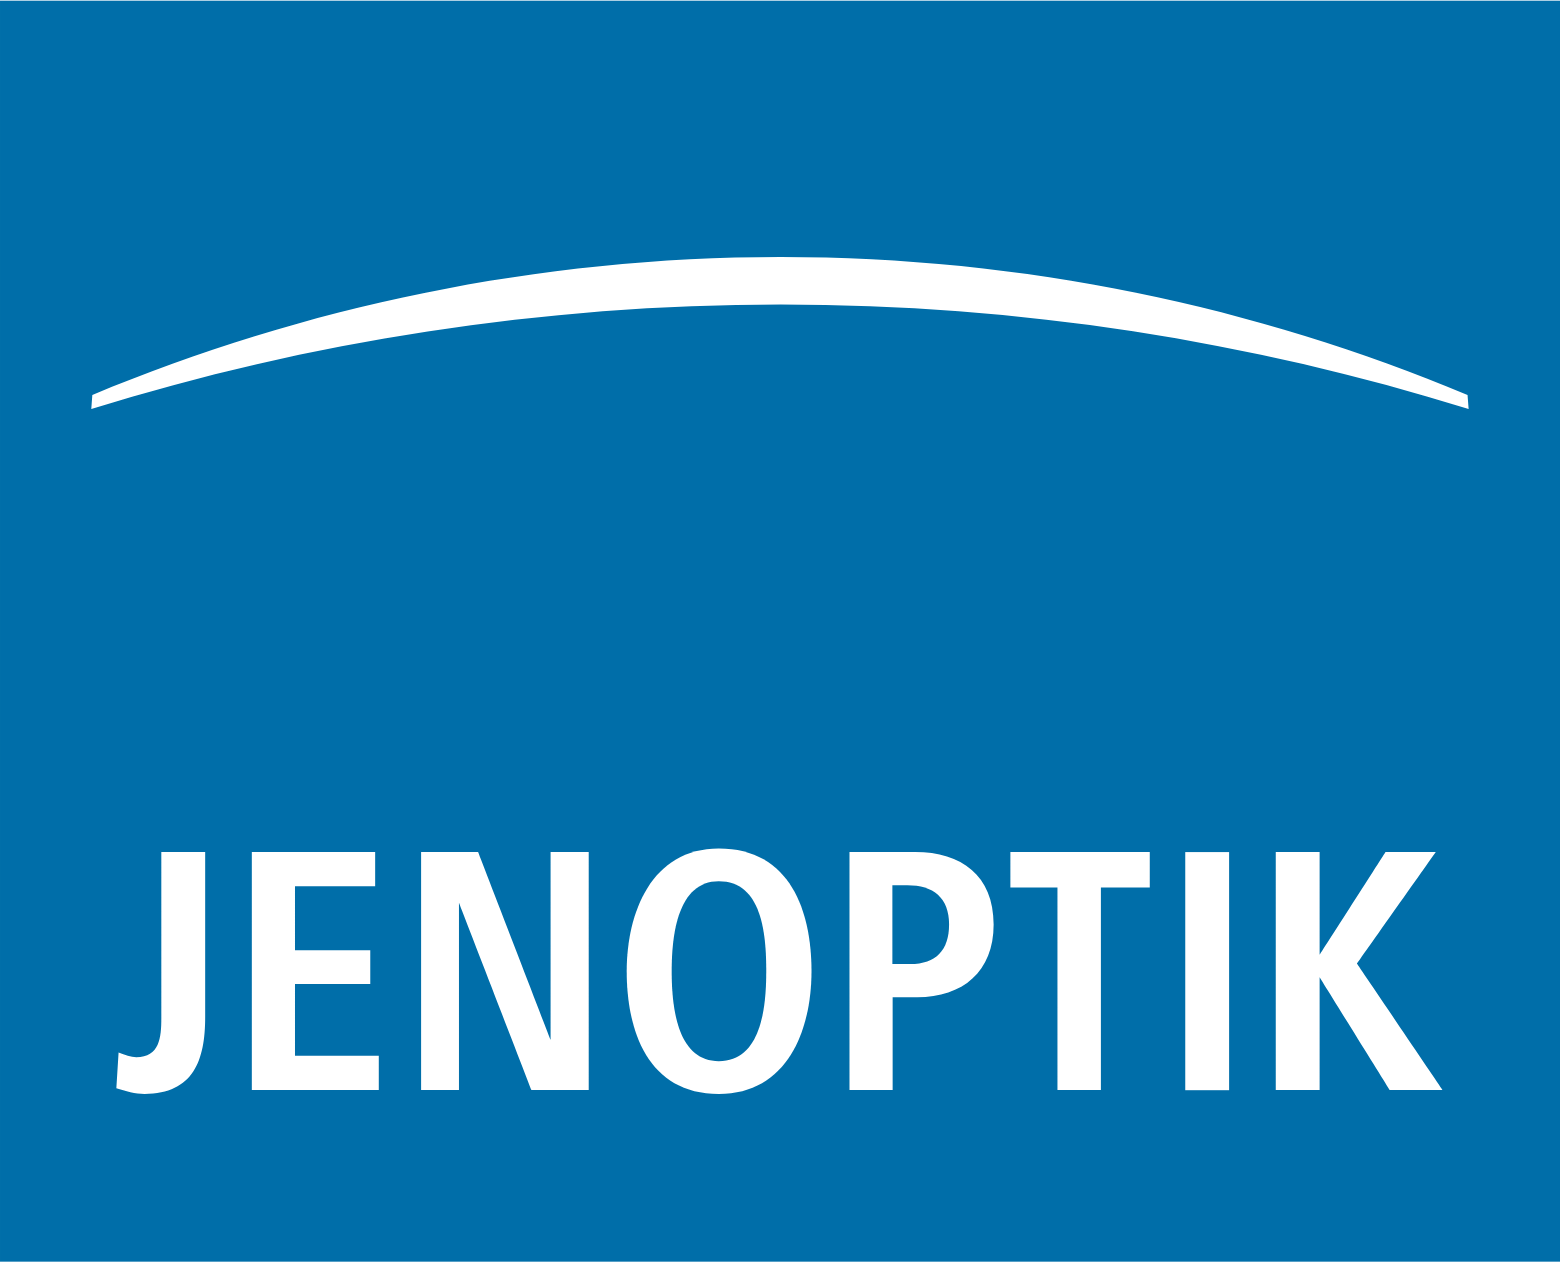 Jenoptik logo (transparent PNG)